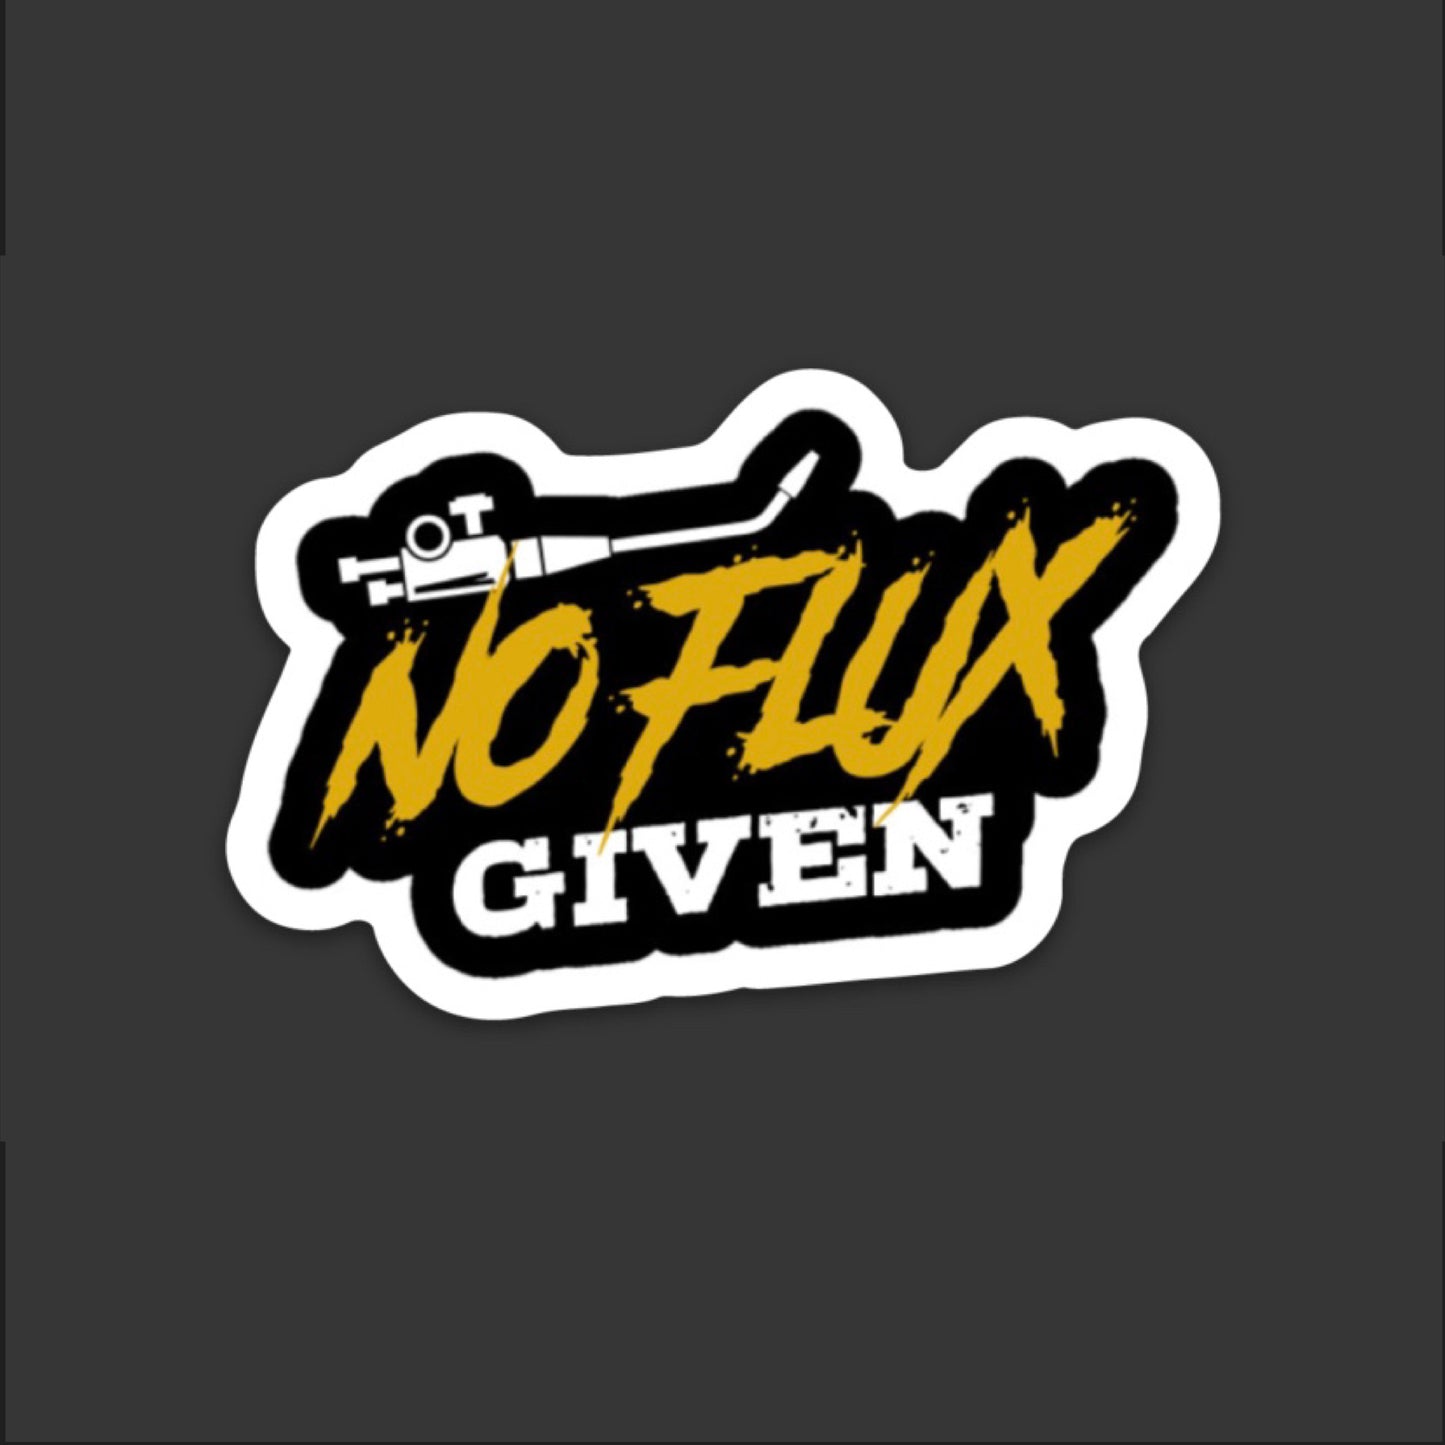 No Flux Given Hardhat Sticker